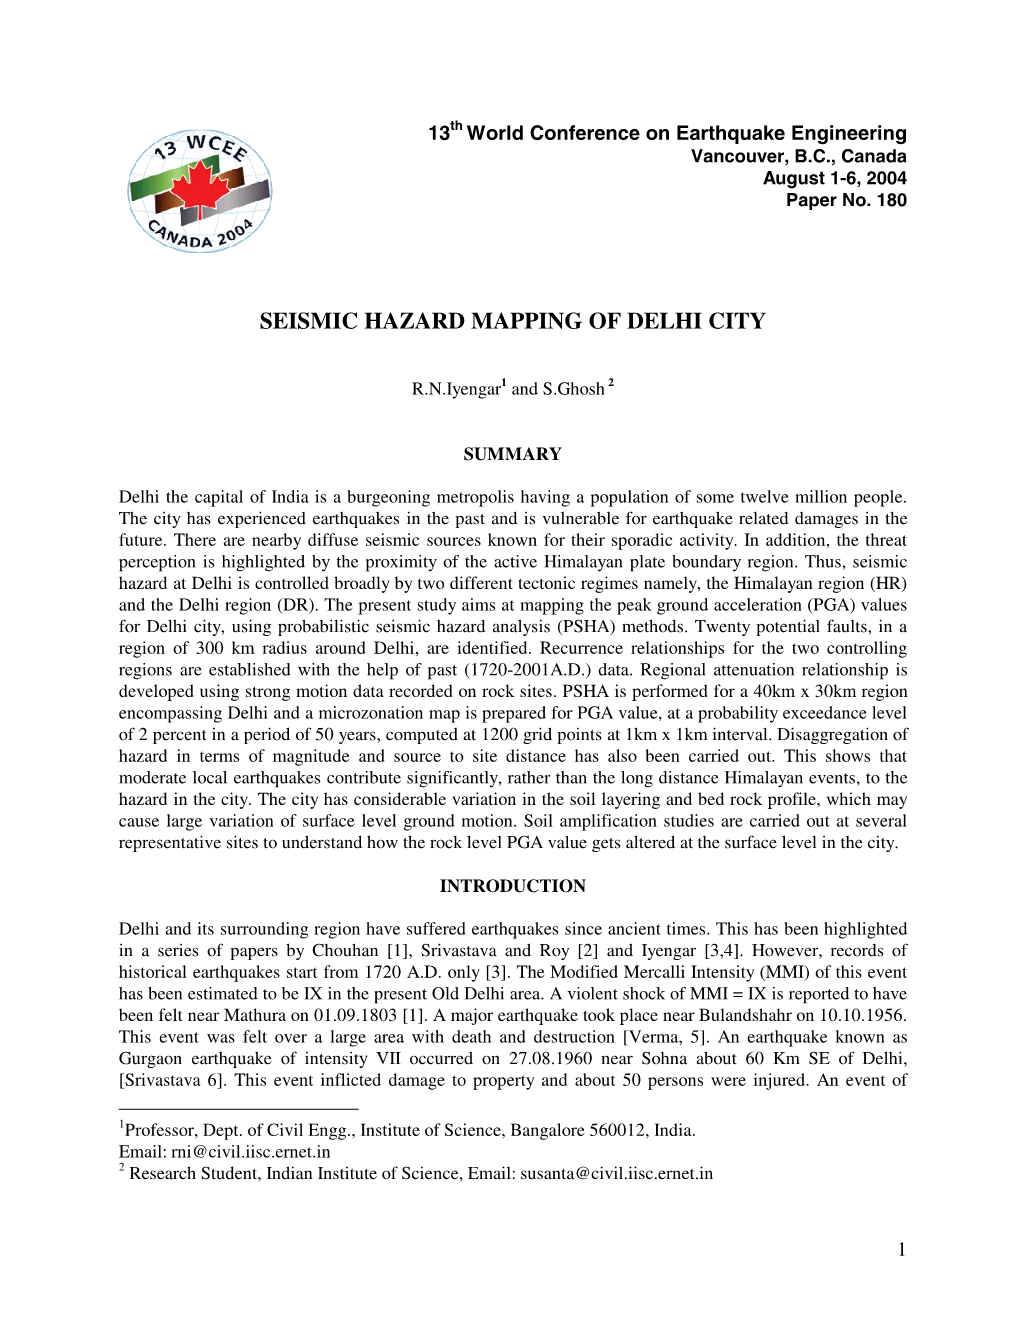 Seismic Hazard Mapping of Delhi City